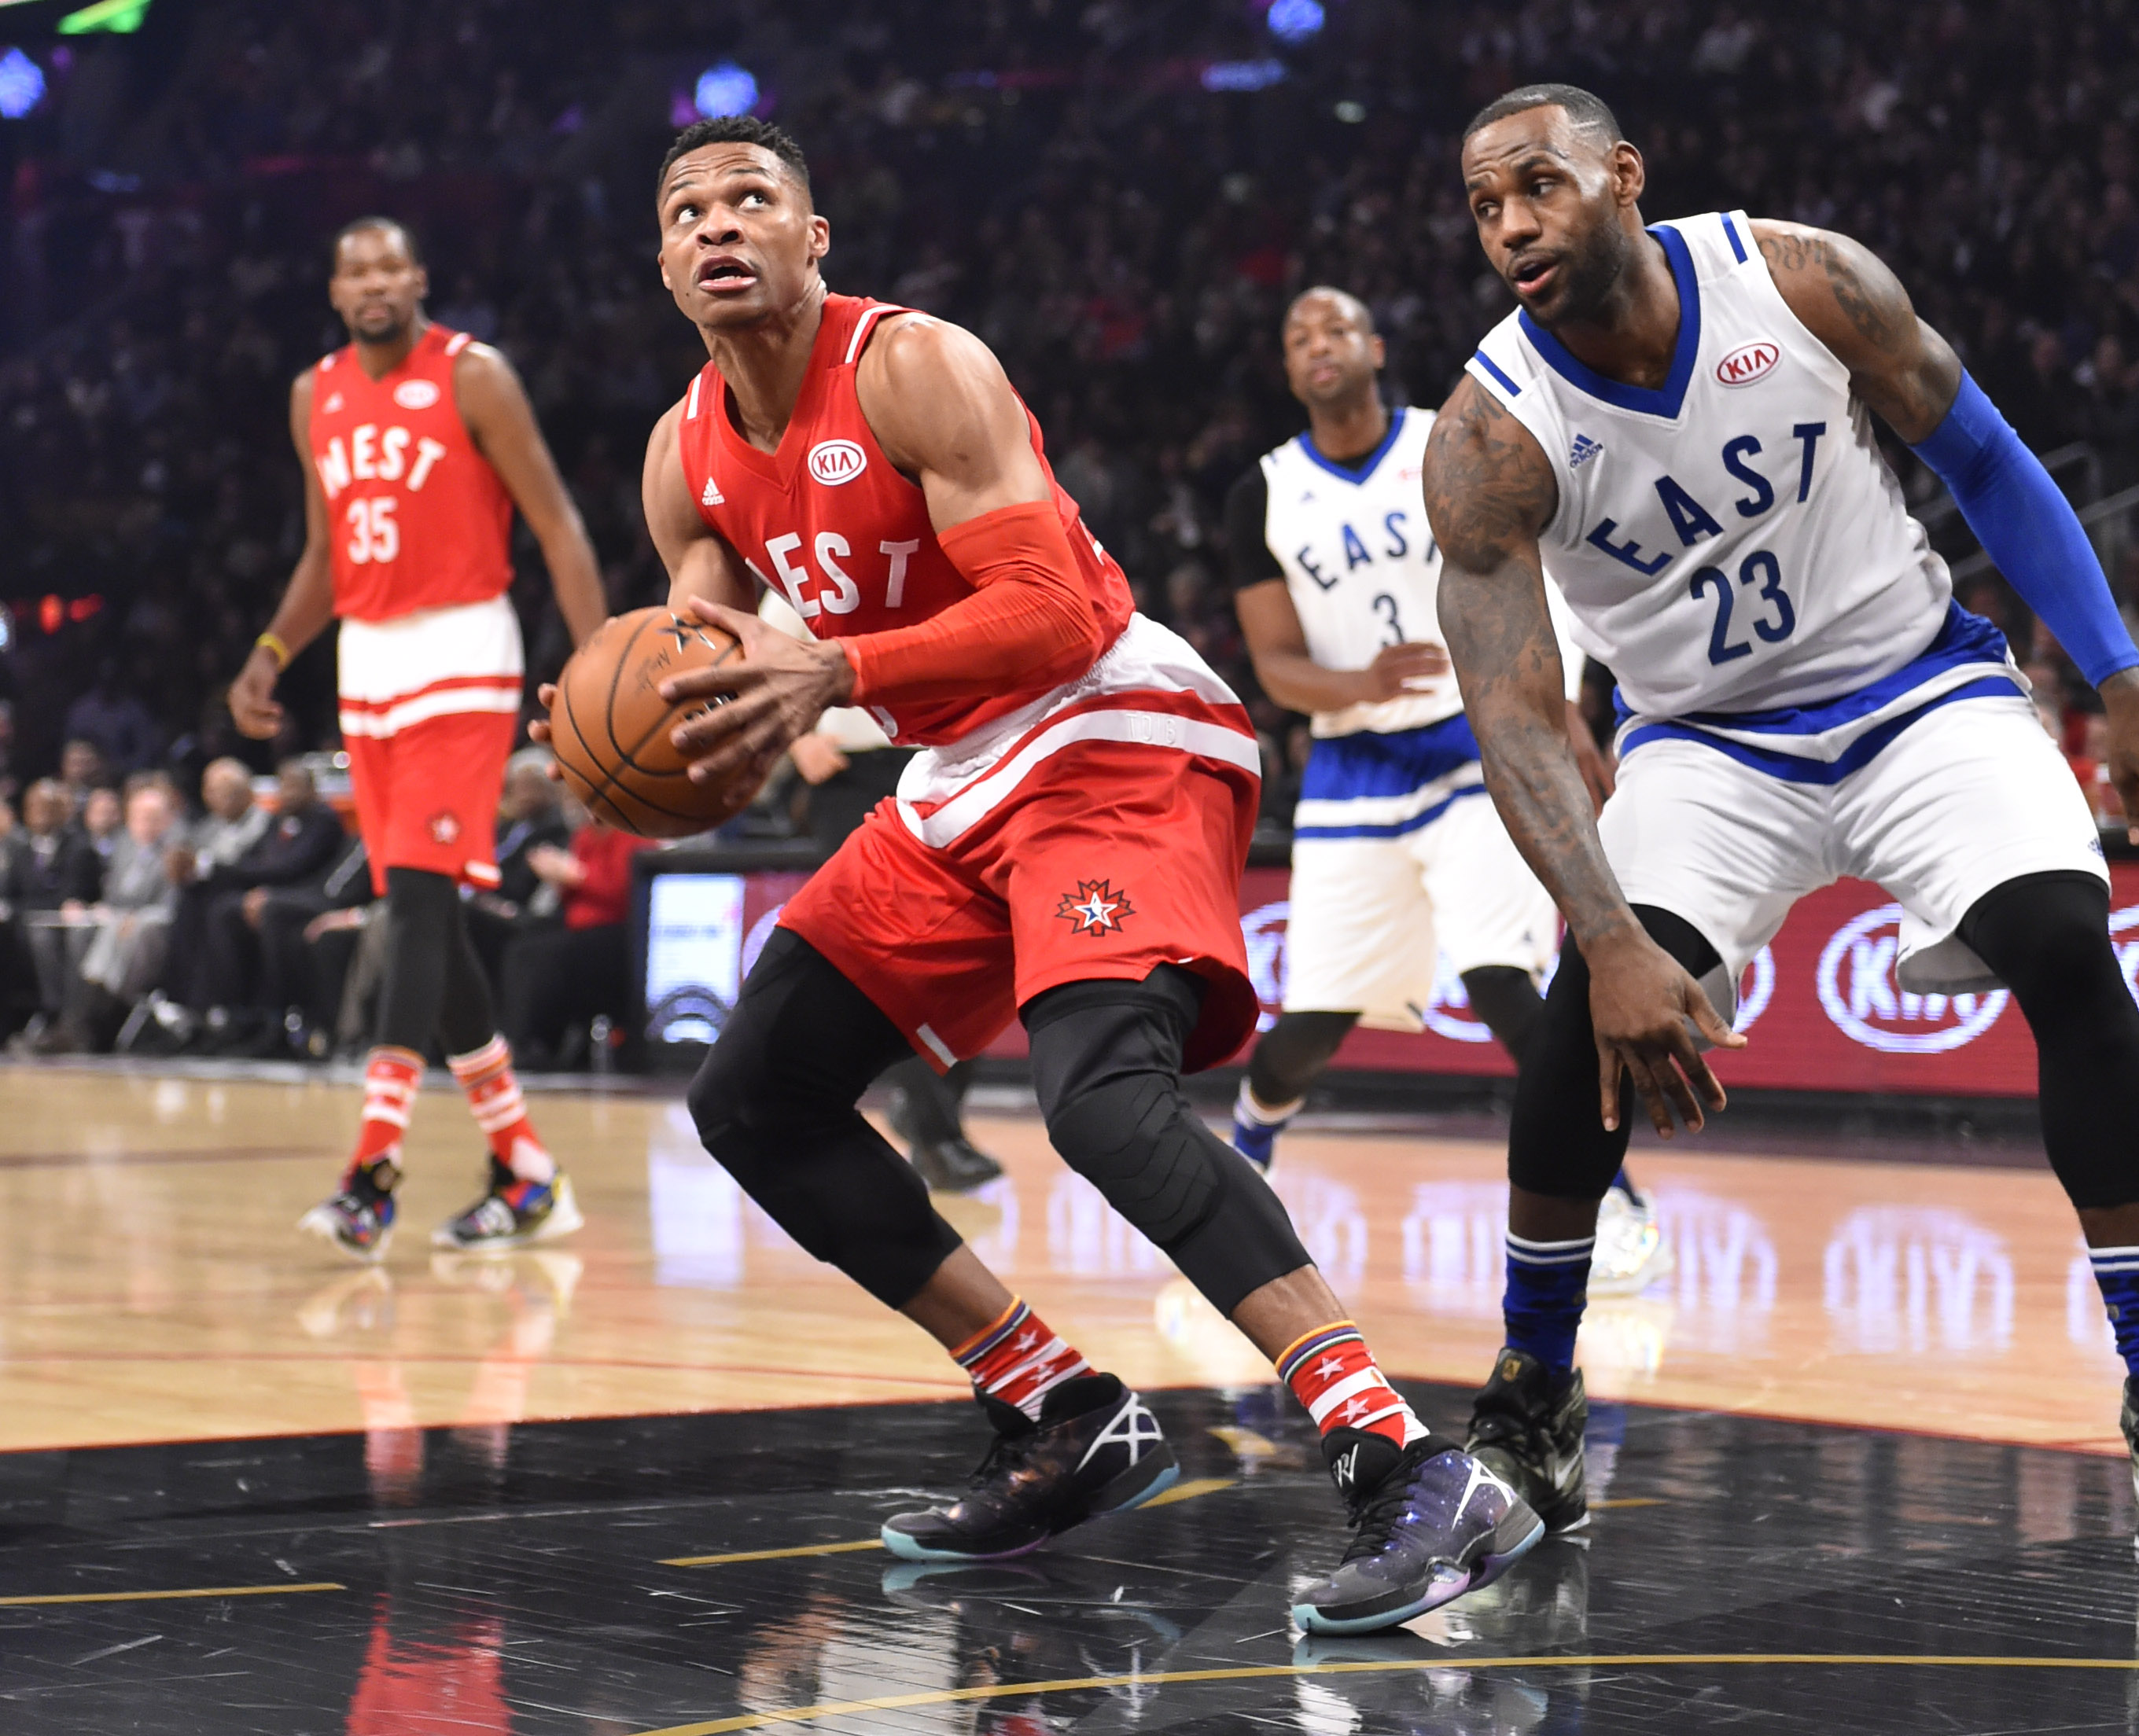 2018 NBA All-Star Game Teams selected - Westbrook on Team James